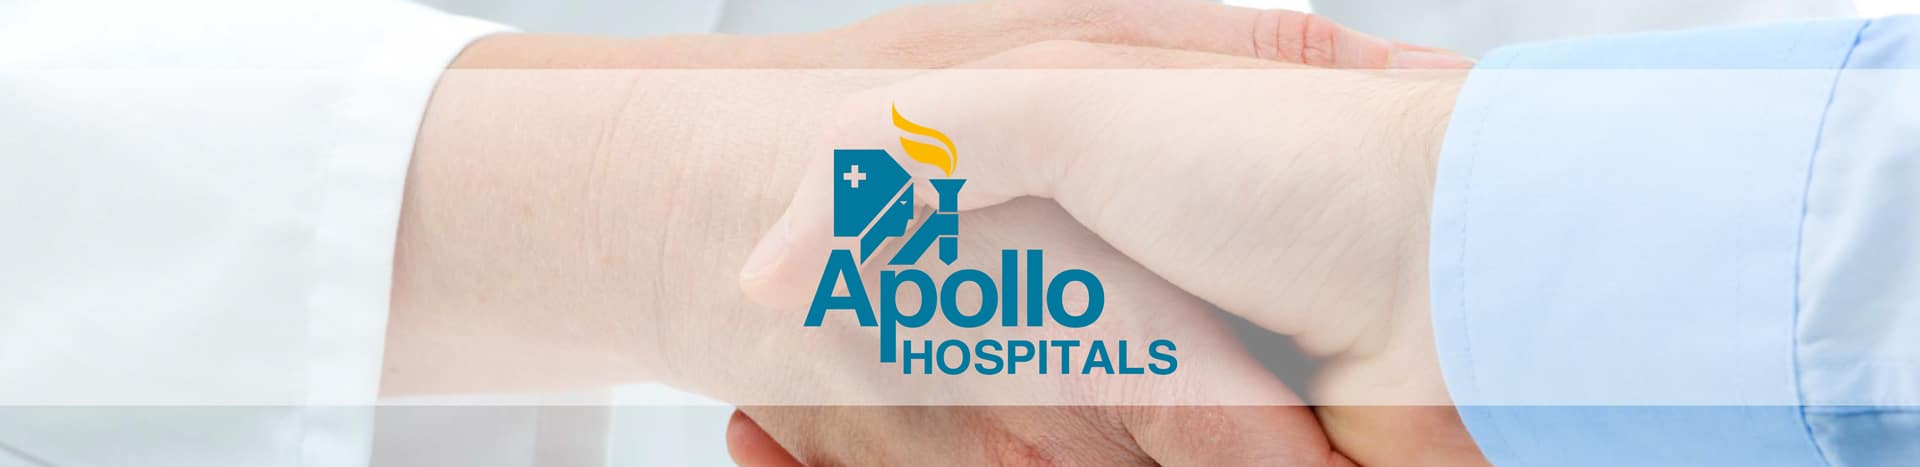 Apollo Radiology | Apollo Hospitals Group